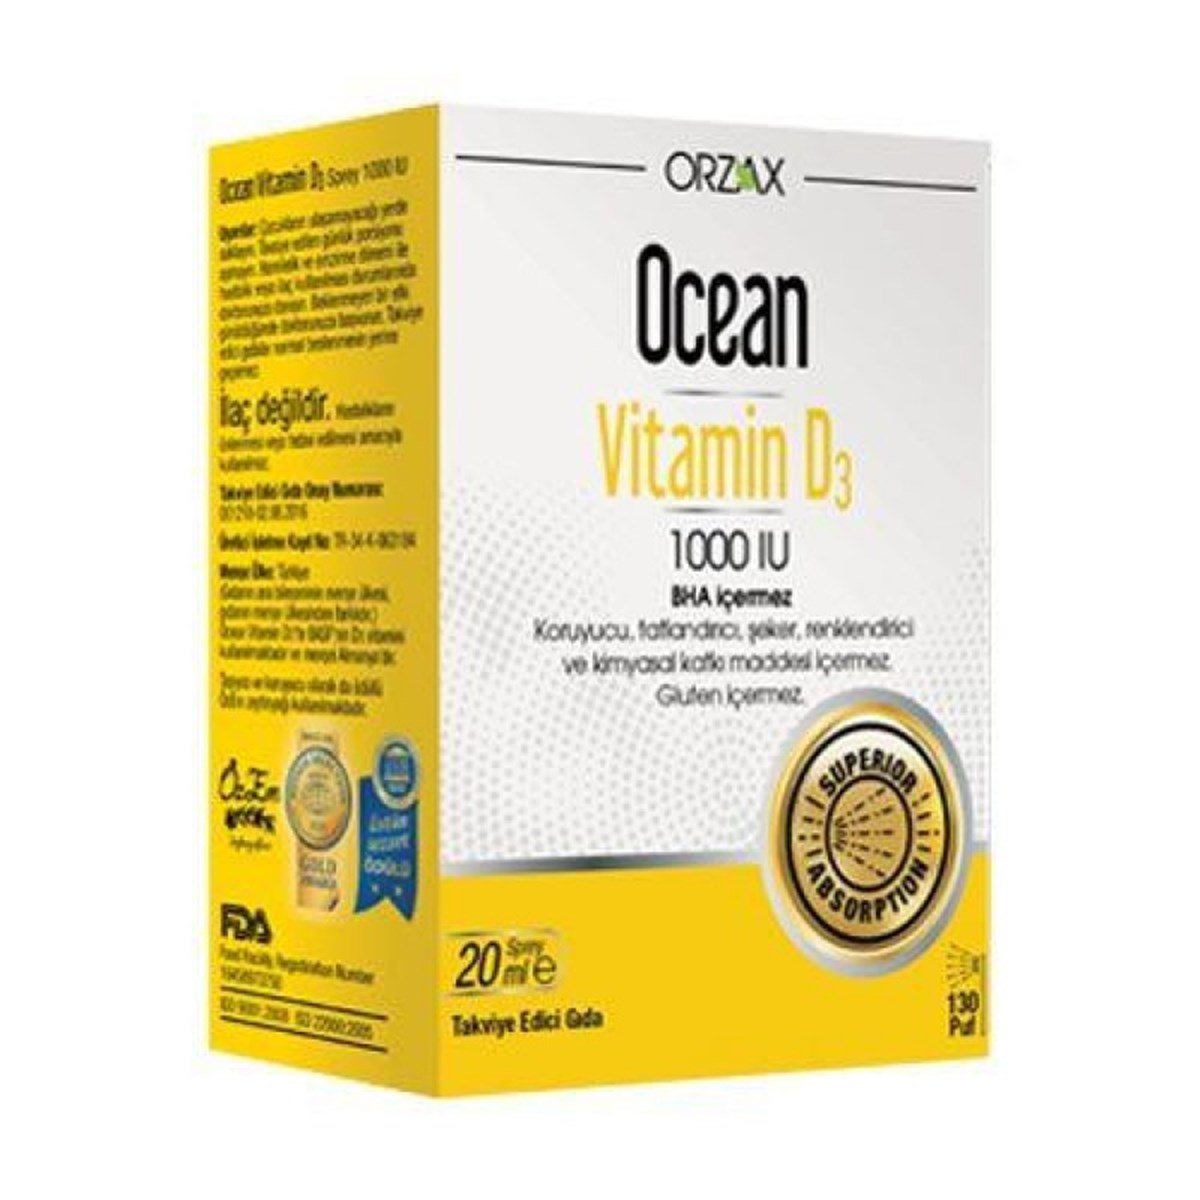 Ocean Vitamin D3 1000 IU Oral Spray 20 ml-LeylekKapida.com